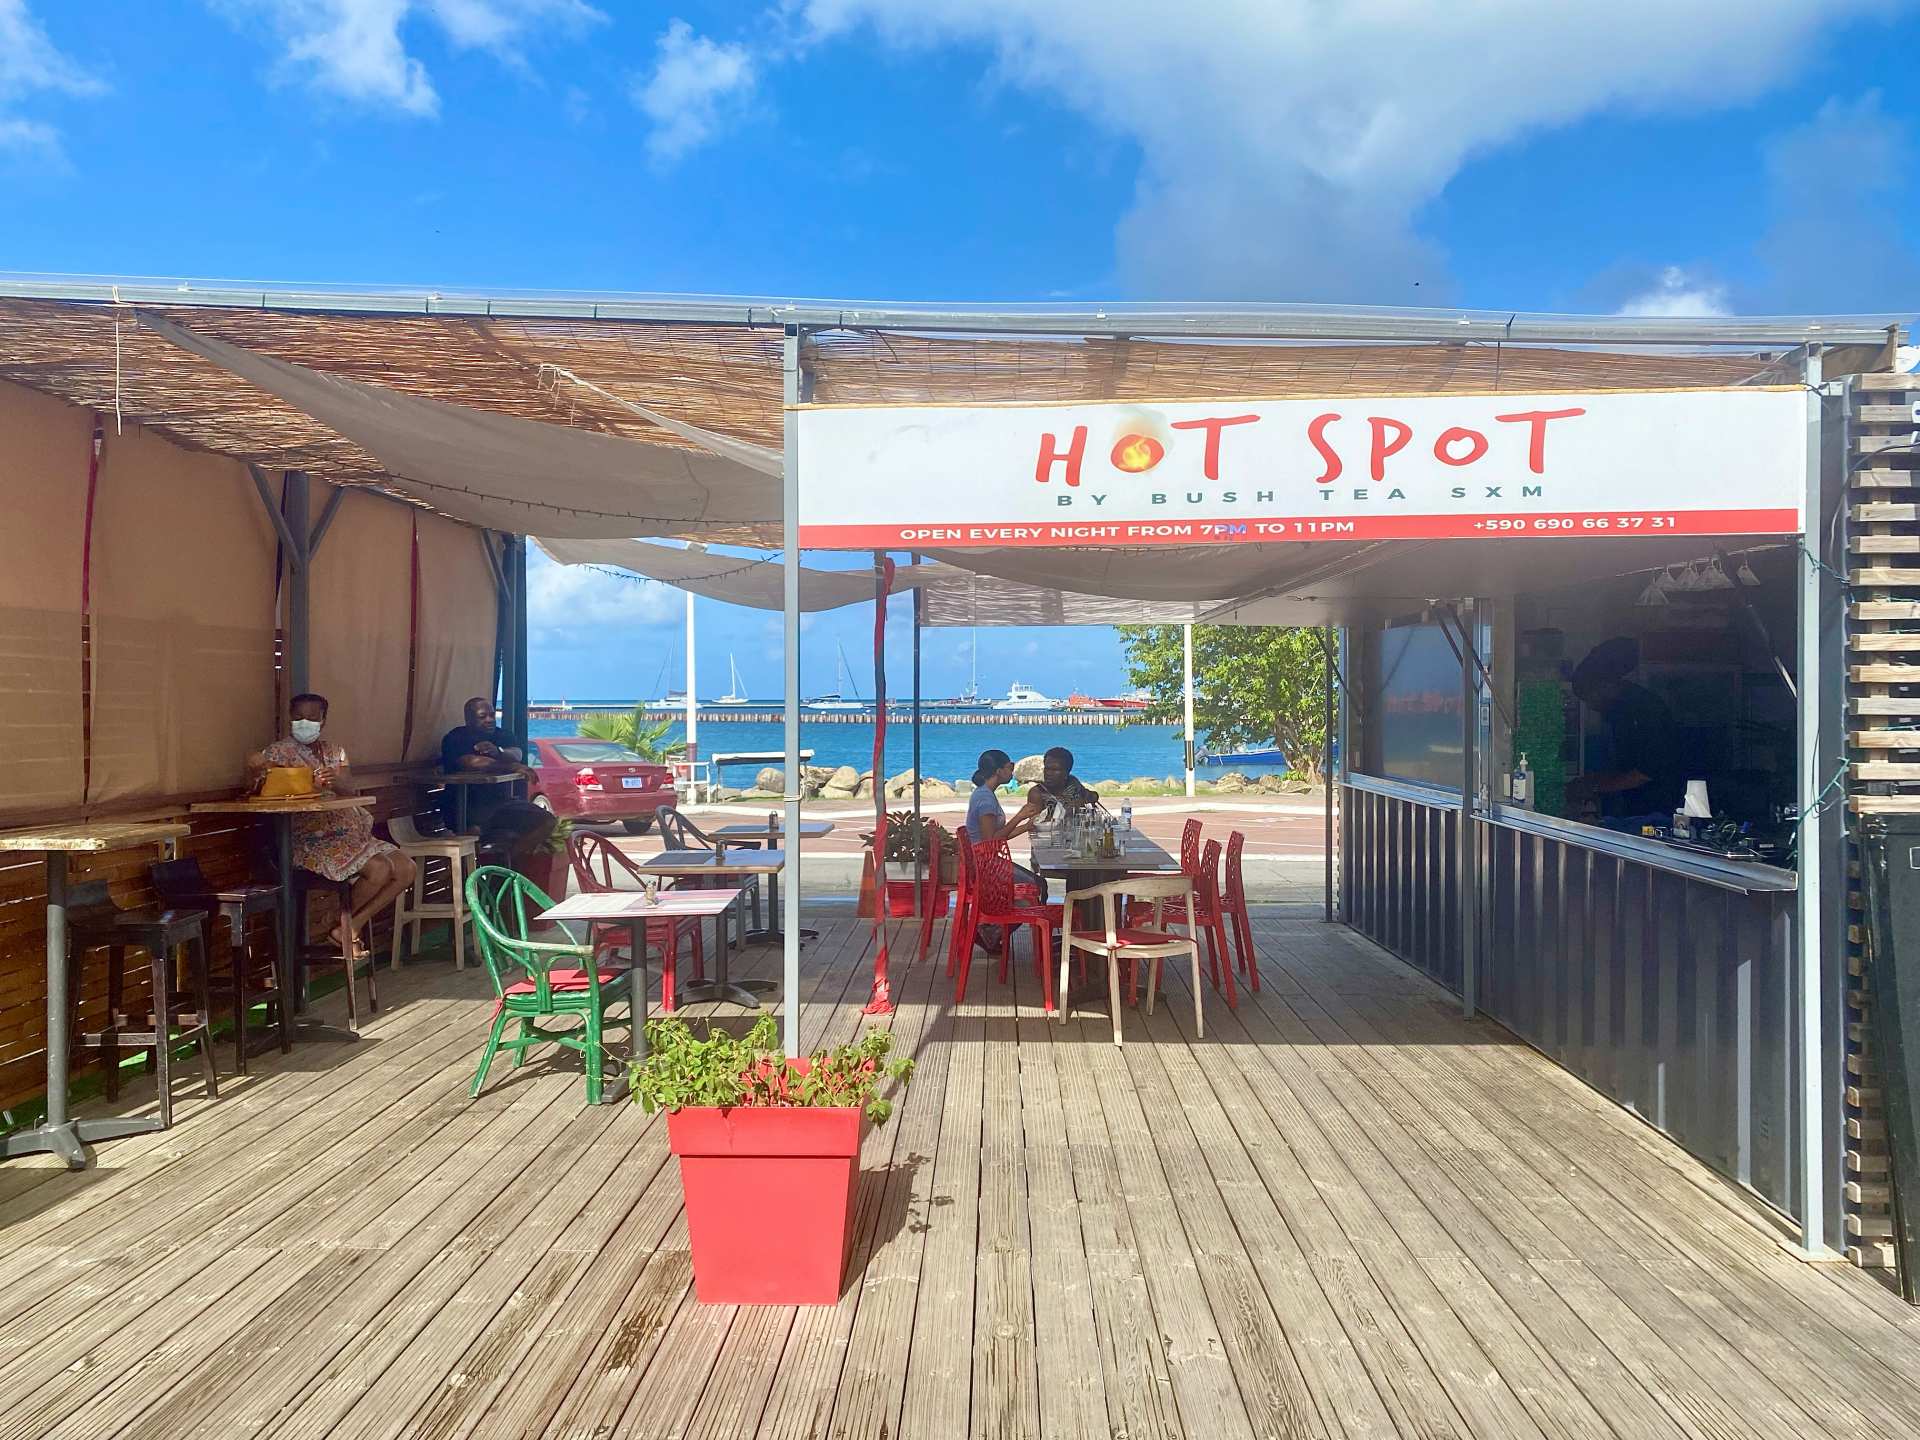 Saint Martin | Hot Spot, a lolo in Marigot